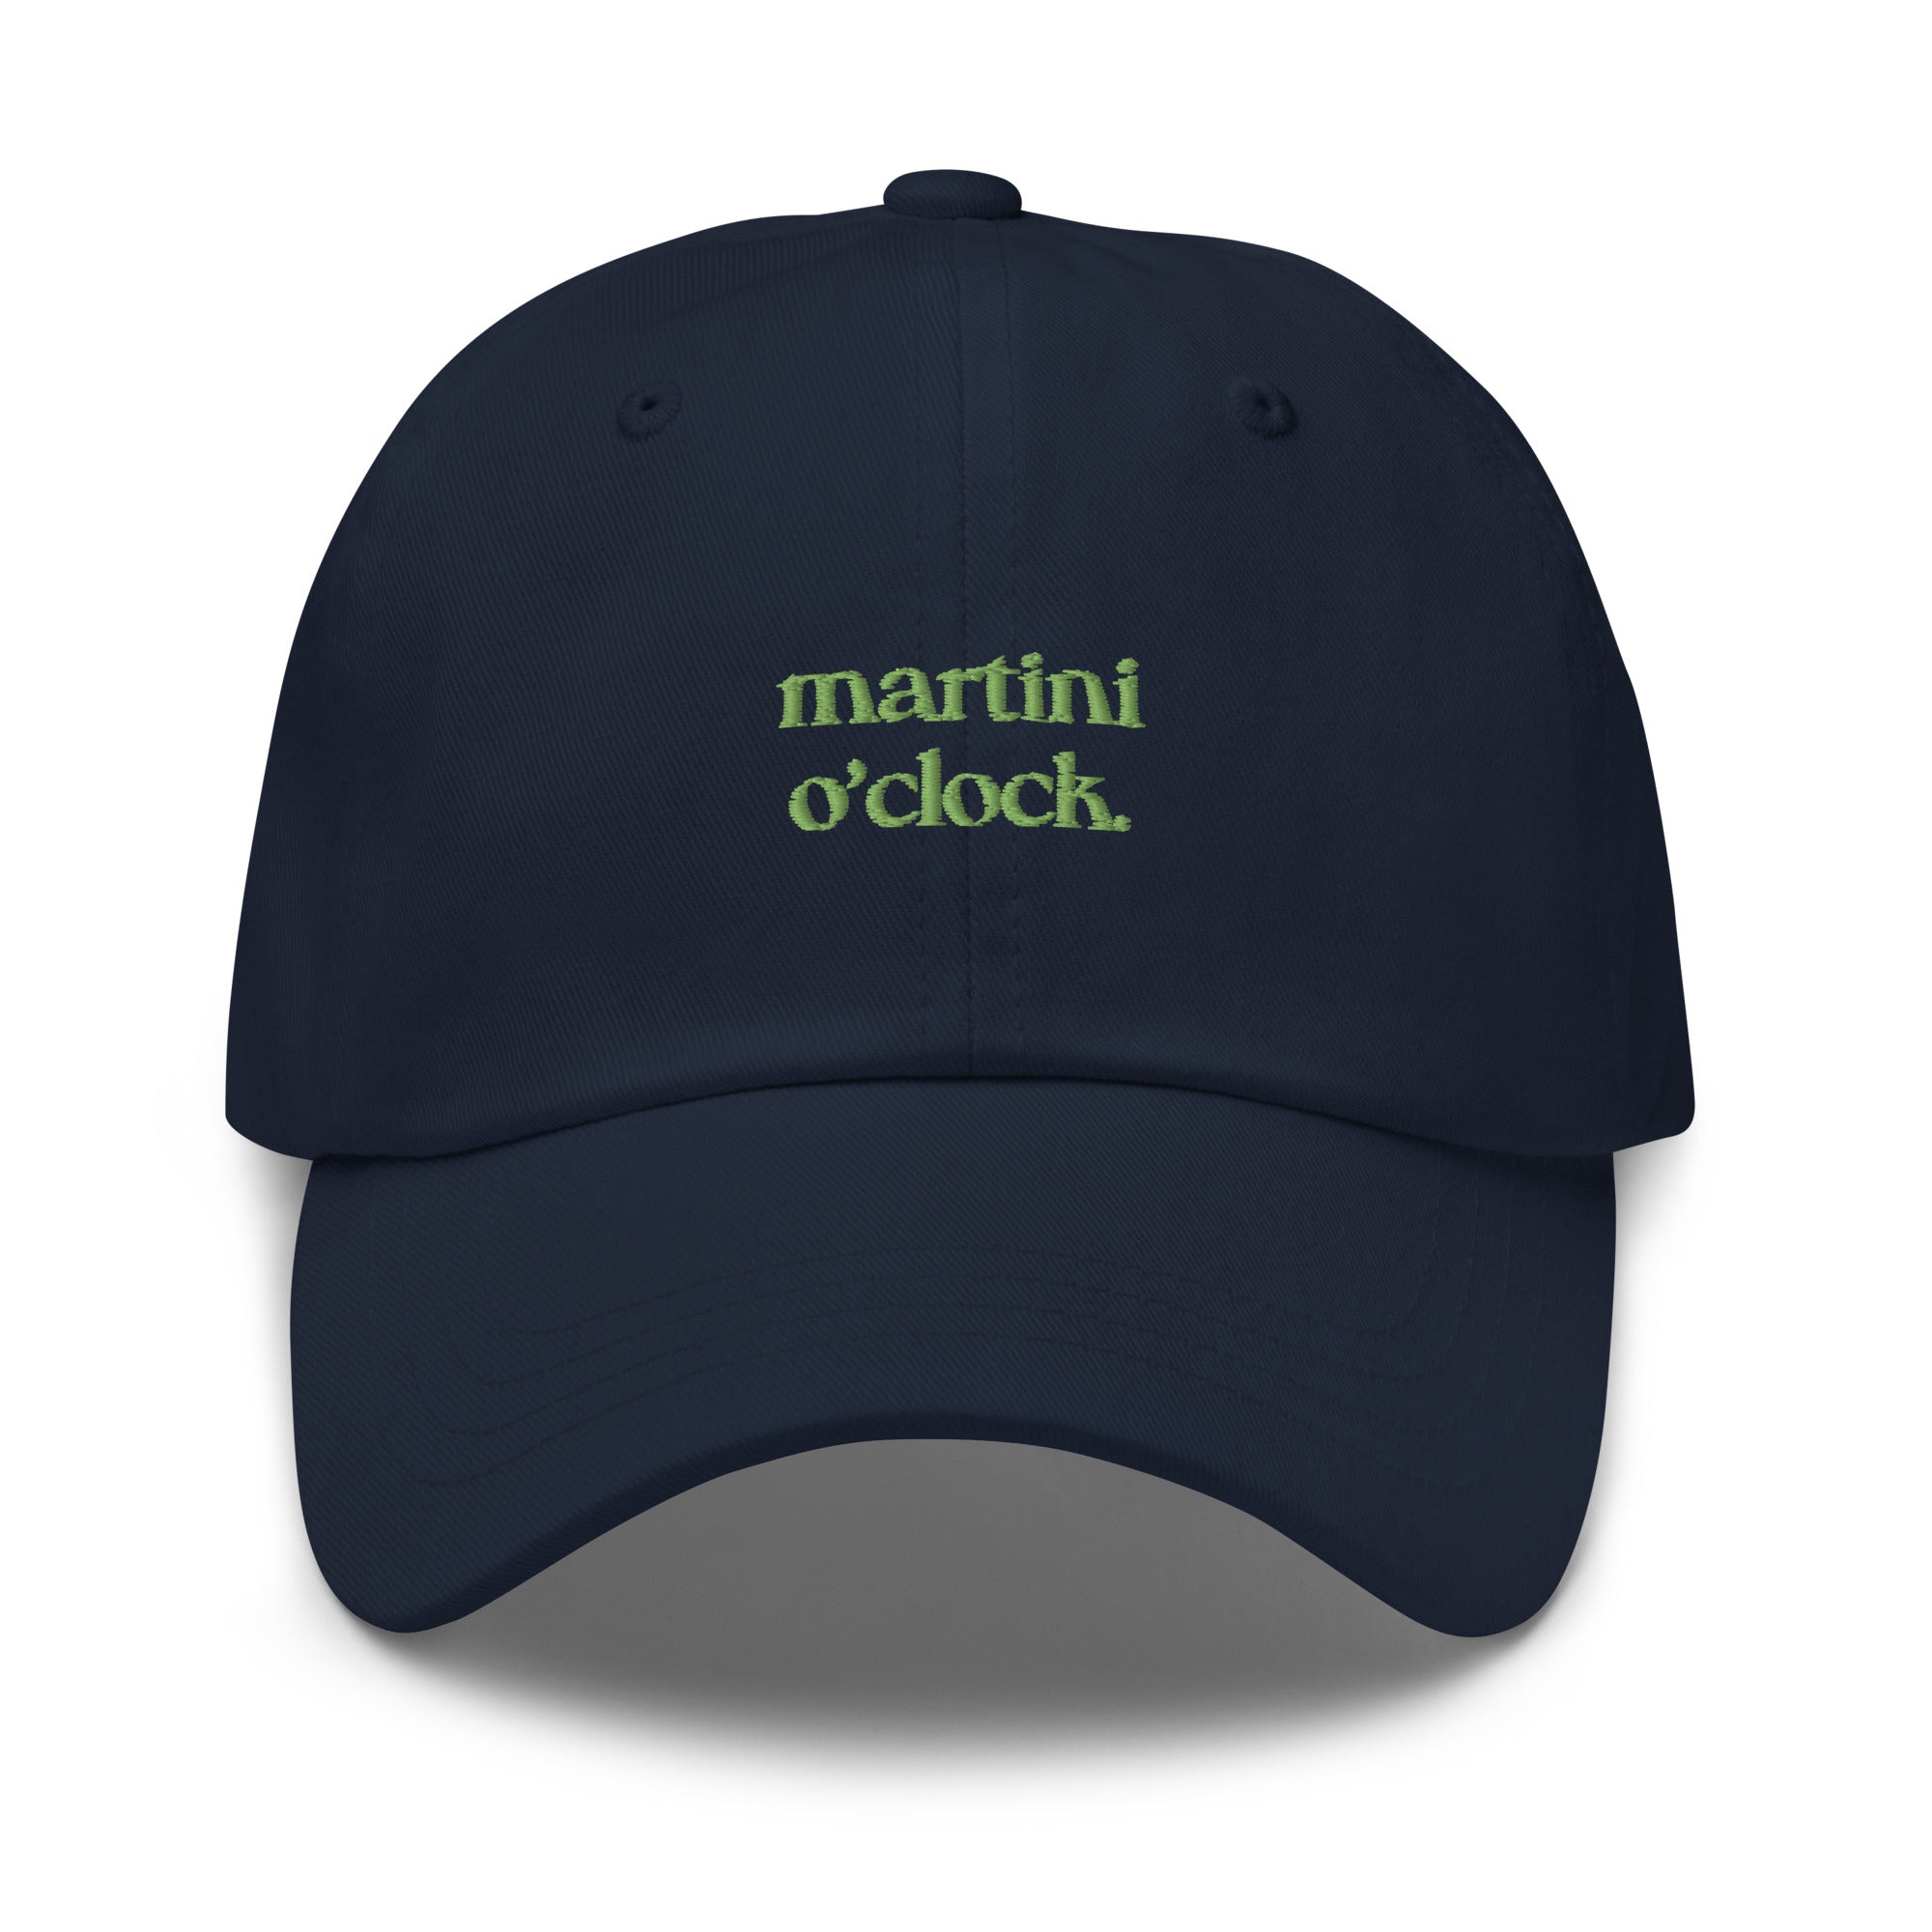 Martini O'clock - Dad hat